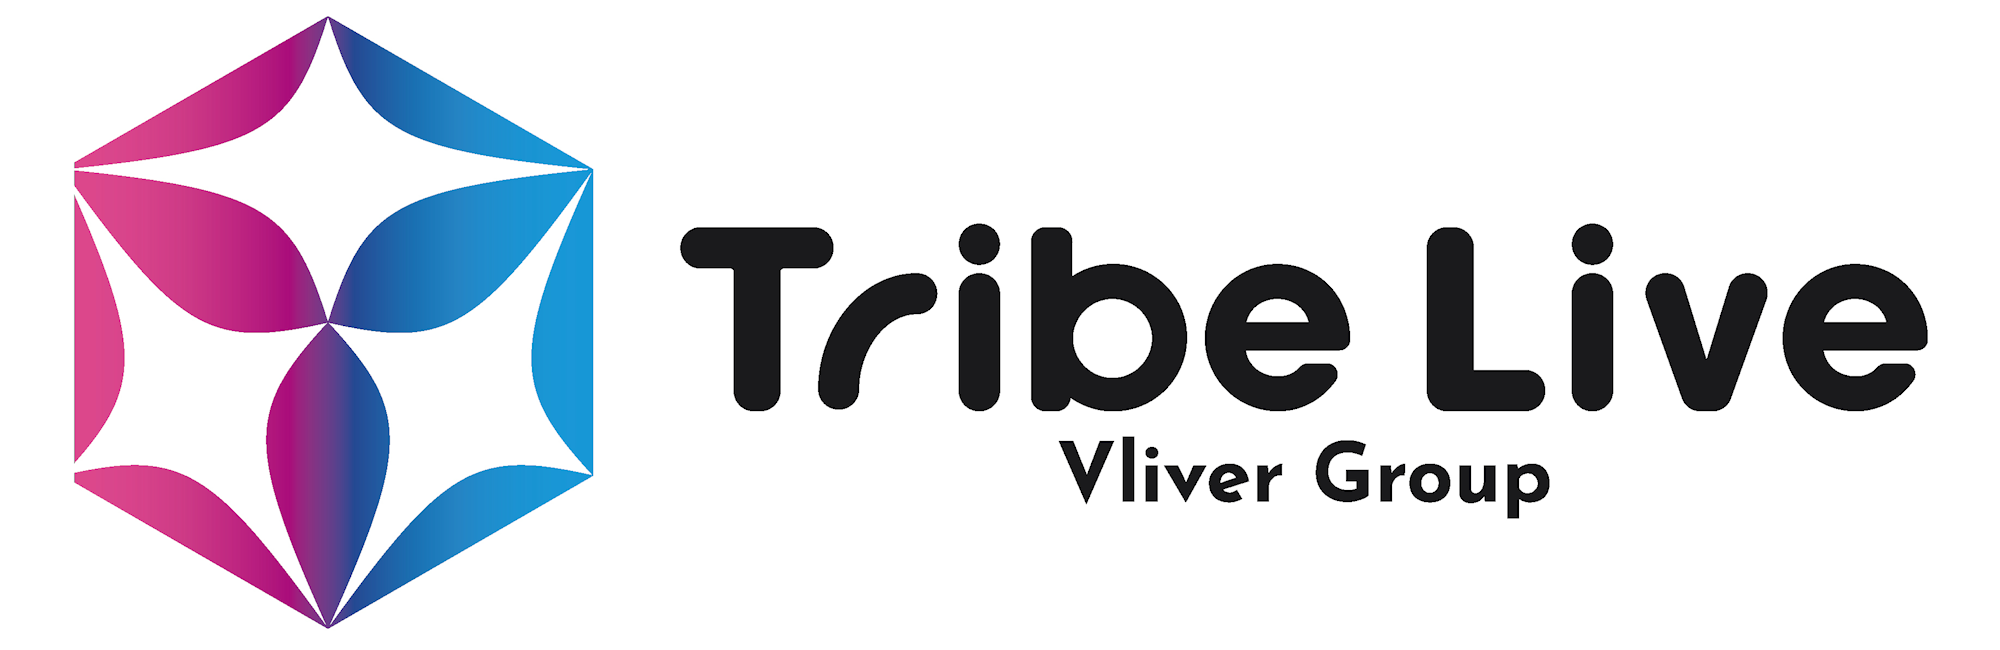 Tribe Live Vライバーグループ